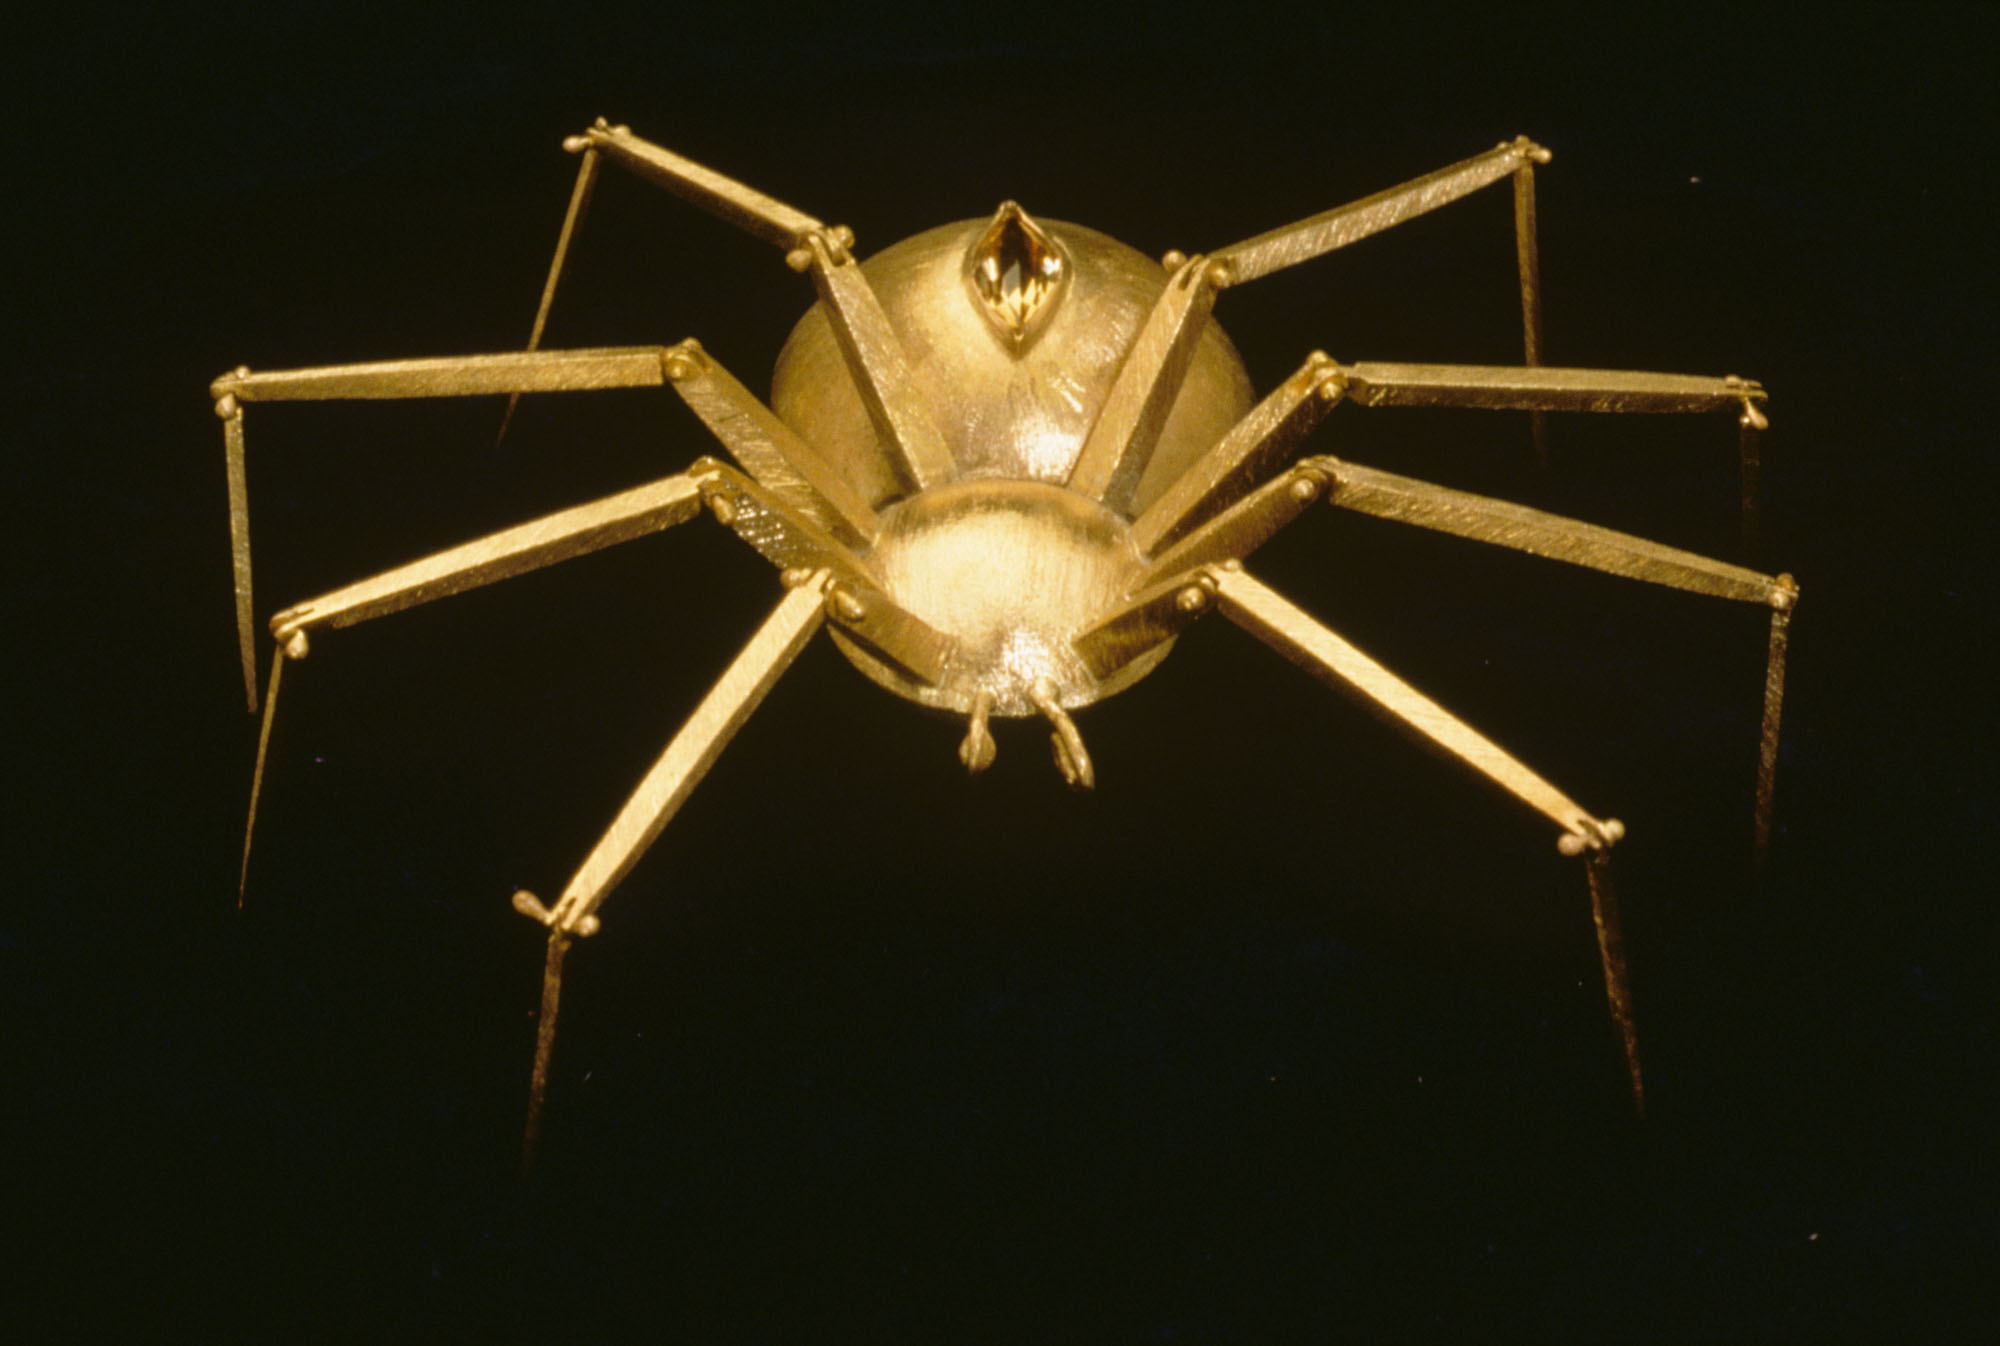 Spider of Tiphareth, detail